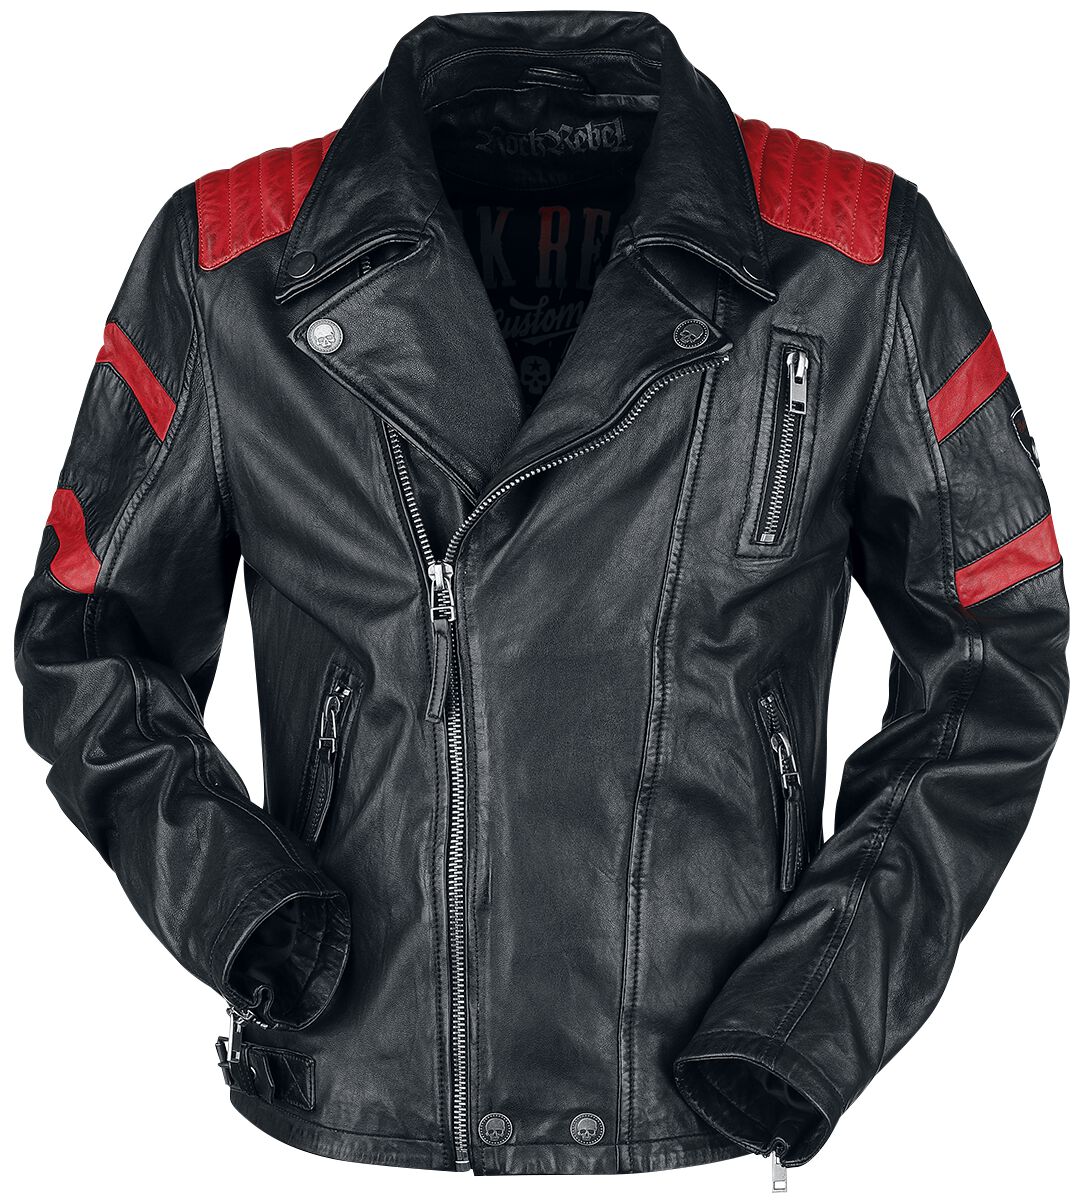 Black/Red Leather Biker Jacket | Rock Rebel by EMP Kurtka skórzana | EMP